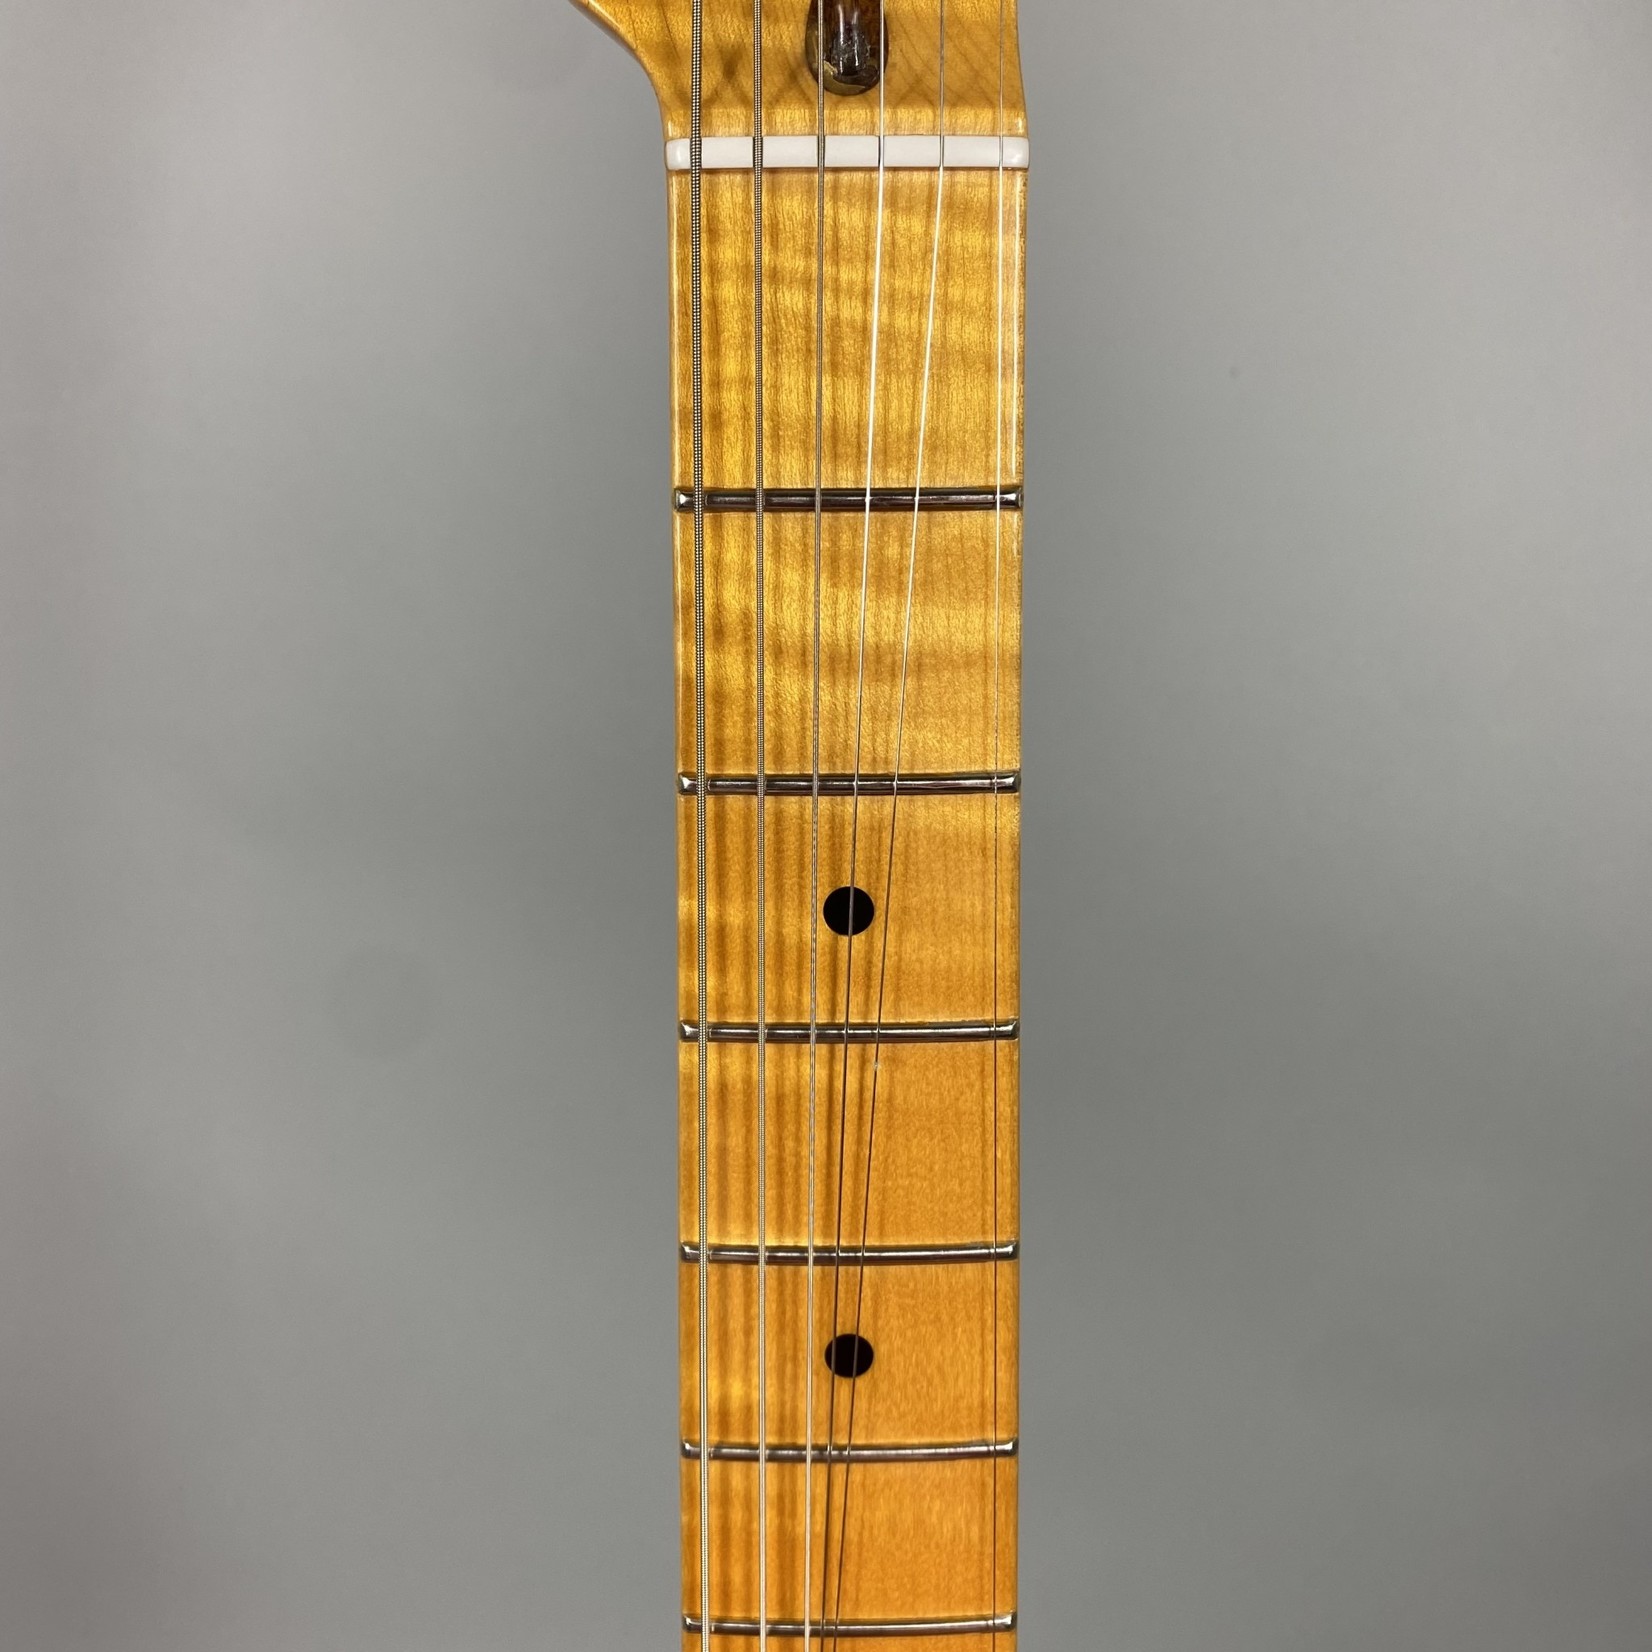 Fender 2017 Fender Merle Haggard "Tuff Dog" Telecaster